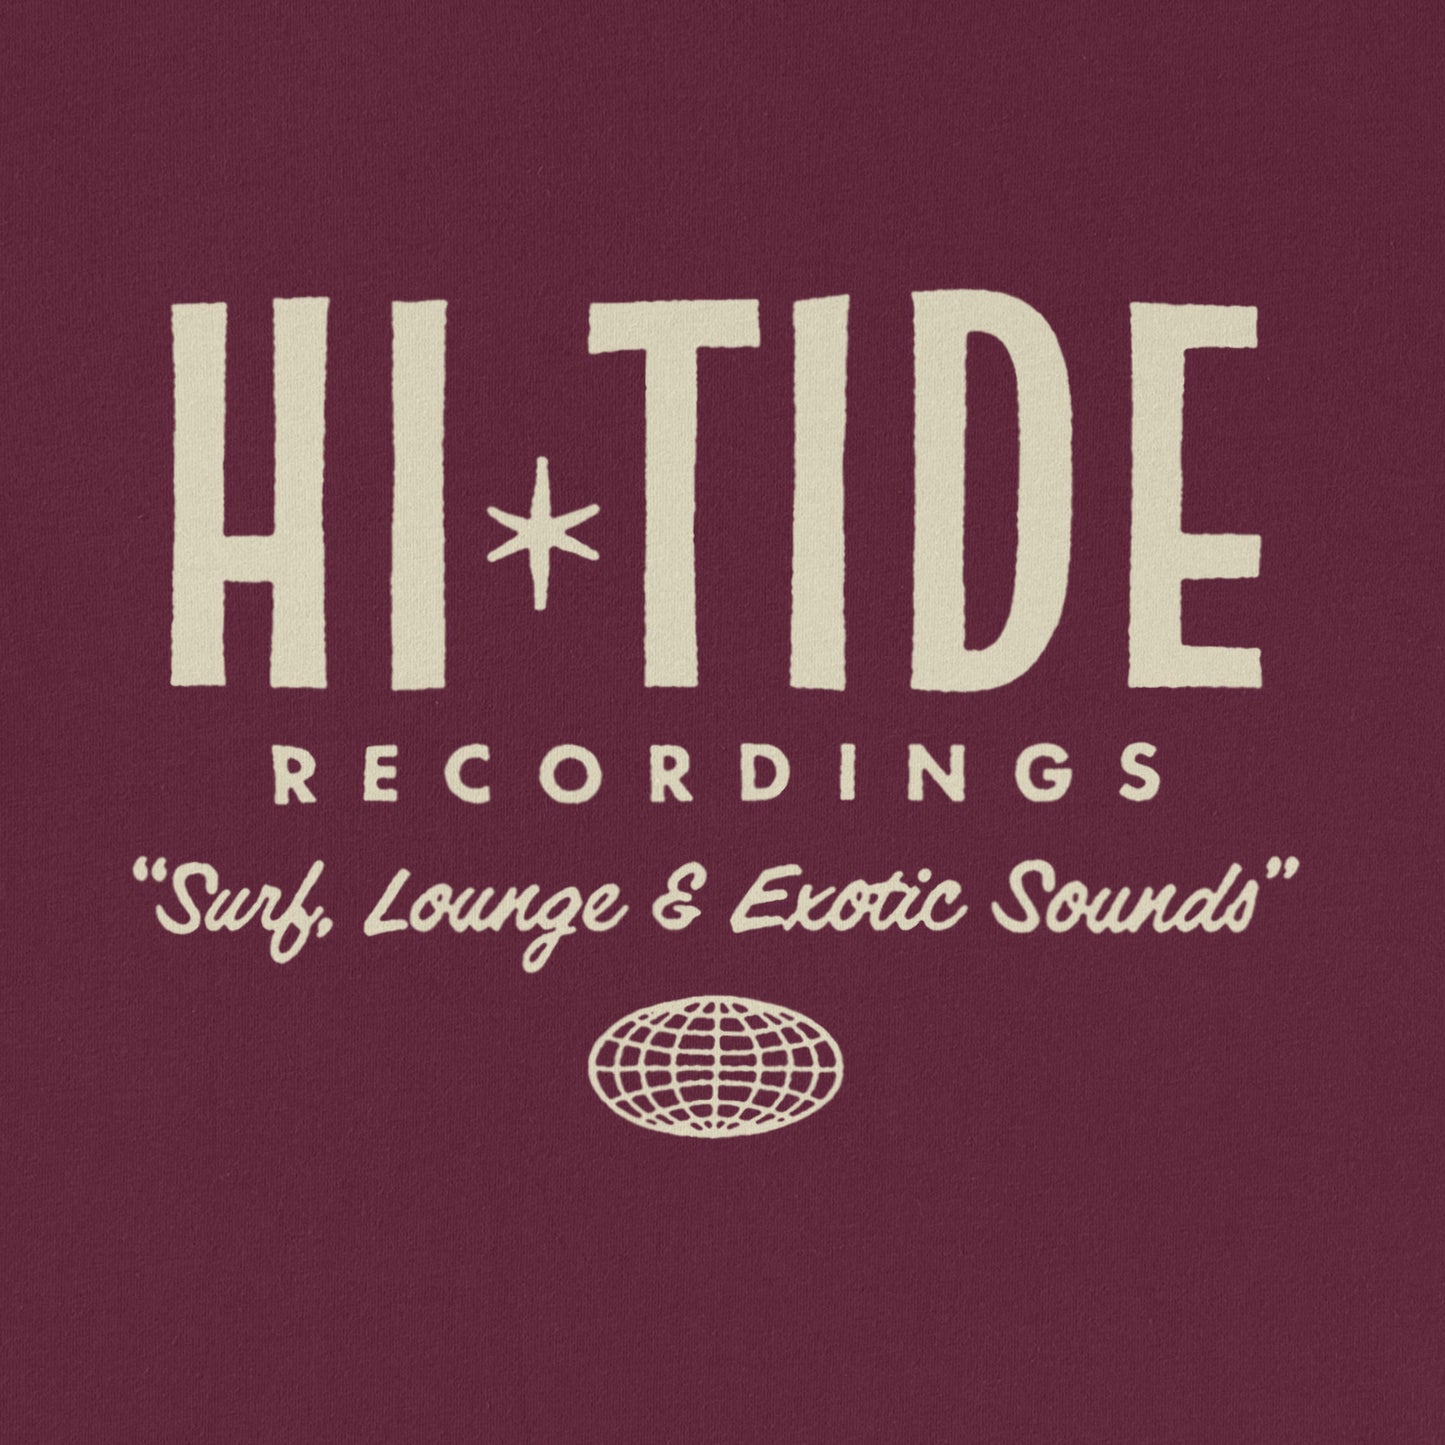 Hi-Tide Recordings "Surf, Lounge & Exotic Sounds" T